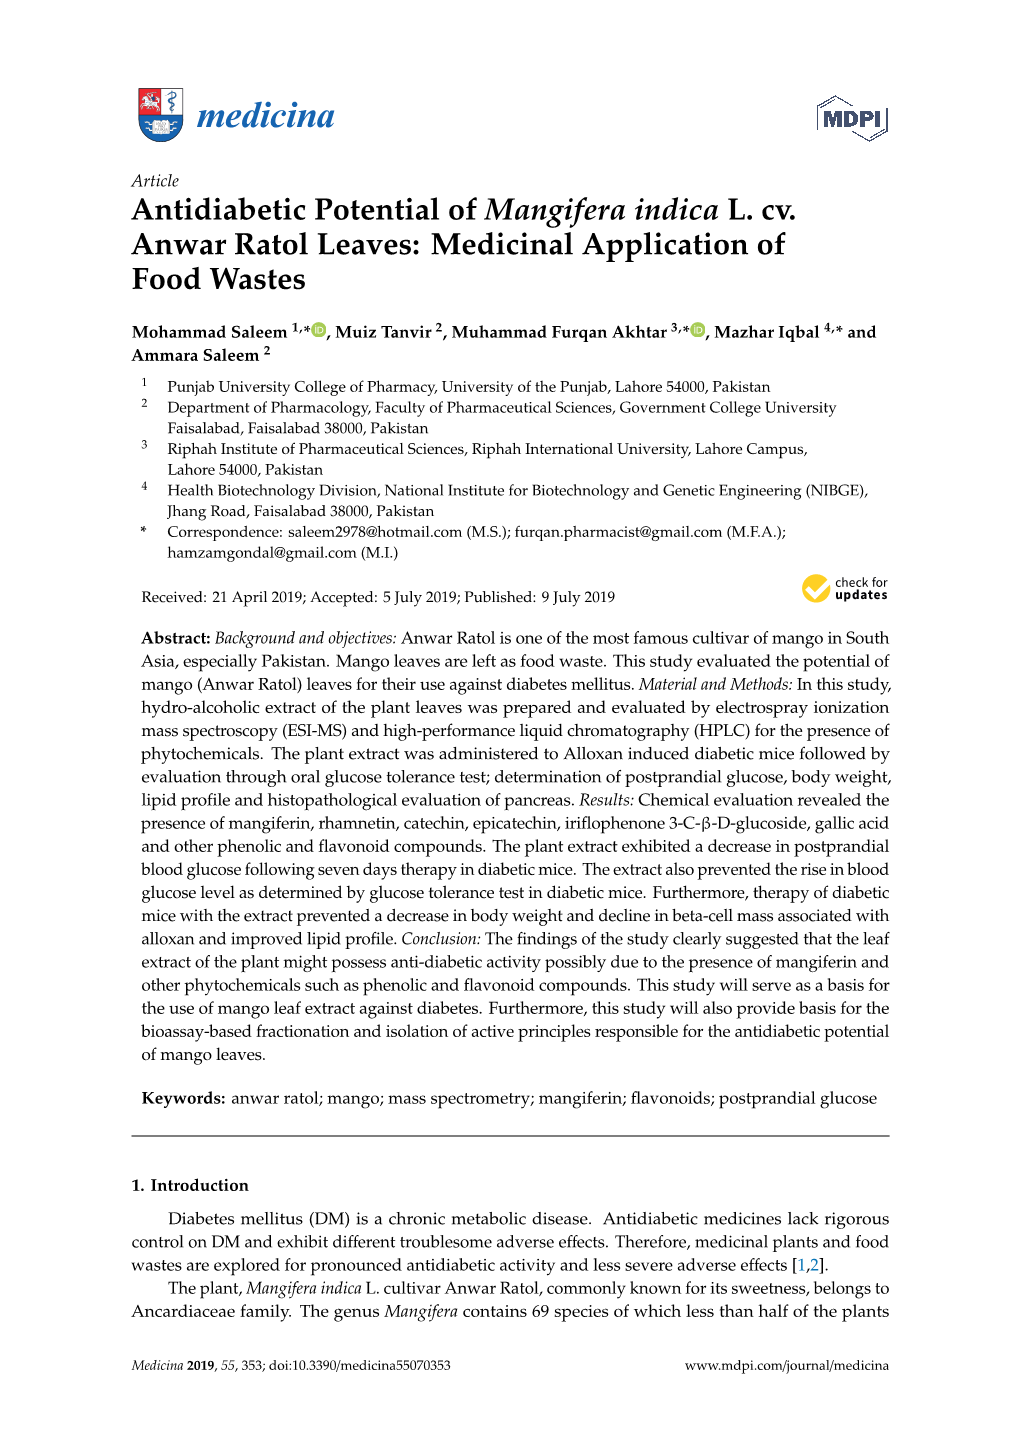 Antidiabetic Potential of Mangifera Indica L. Cv. Anwar Ratol Leaves: Medicinal Application of Food Wastes